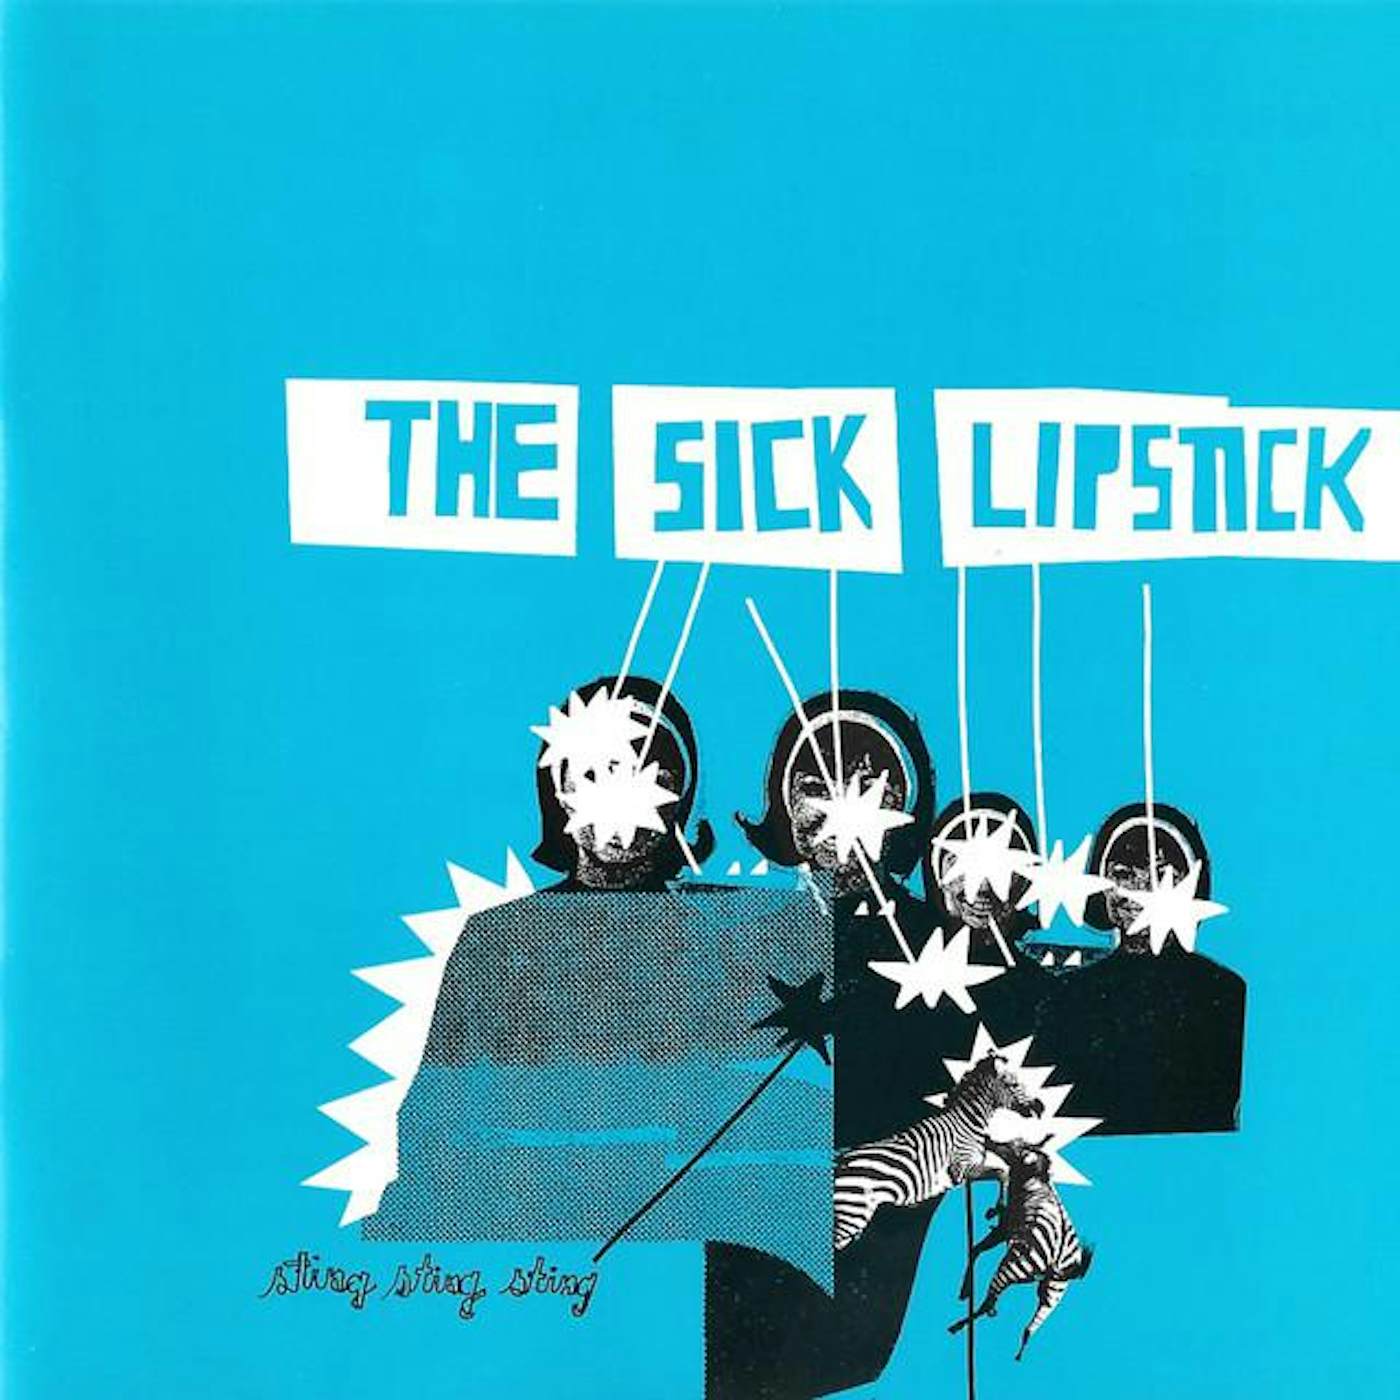 The Sick Lipstick